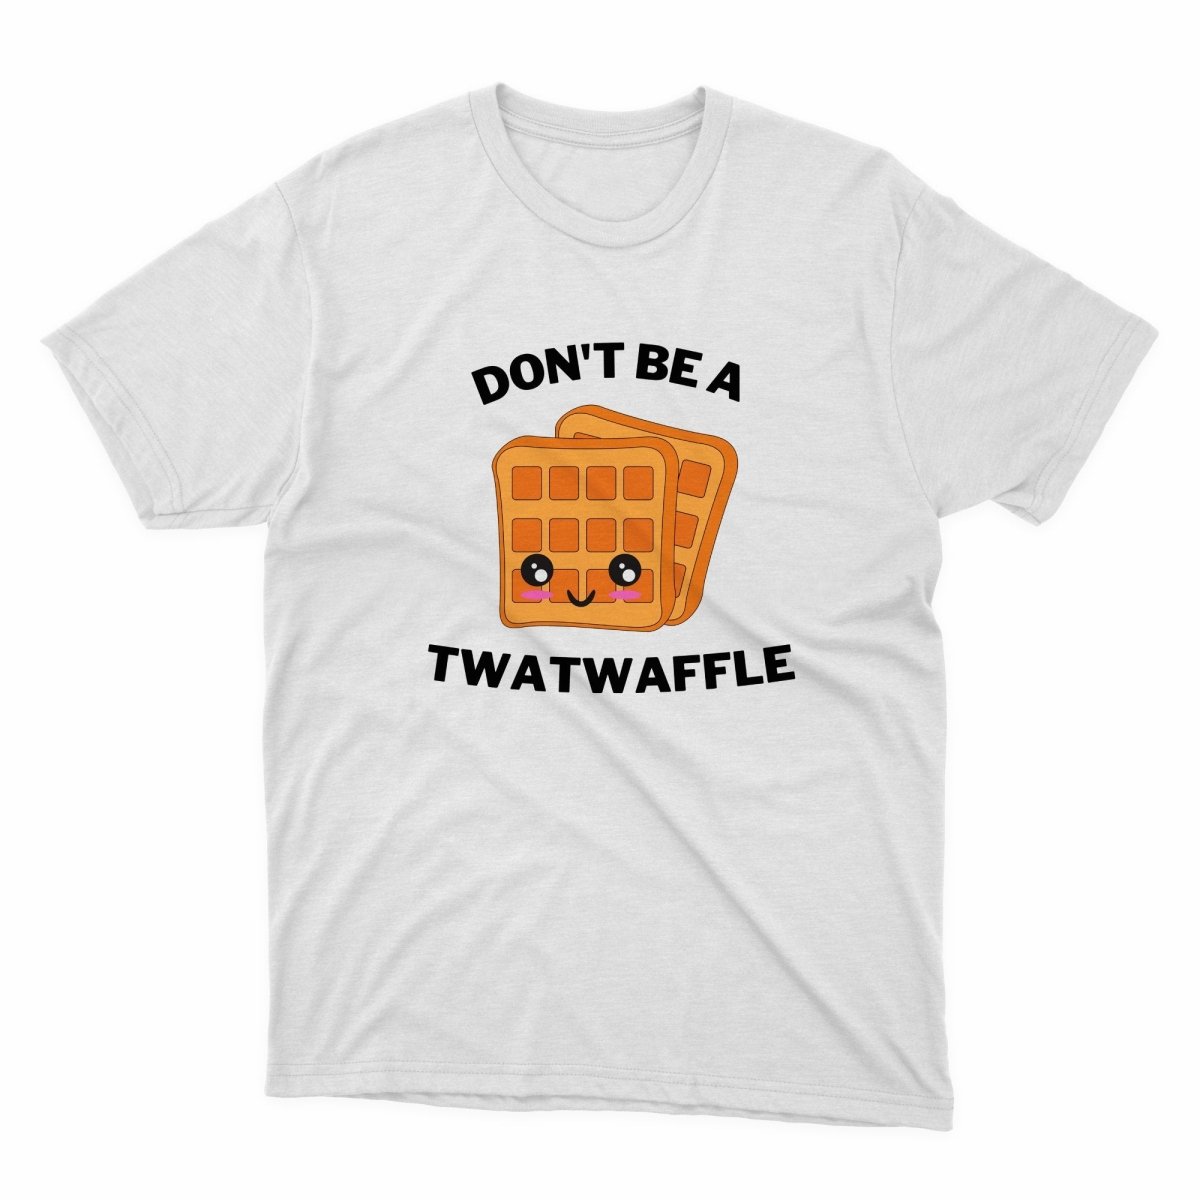 Don't Be A Twat Waffle Shirt - stickerbullDon't Be A Twat Waffle ShirtShirtsPrintifystickerbull68574721698936018074WhiteSa white t - shirt that says don't be a twataffle